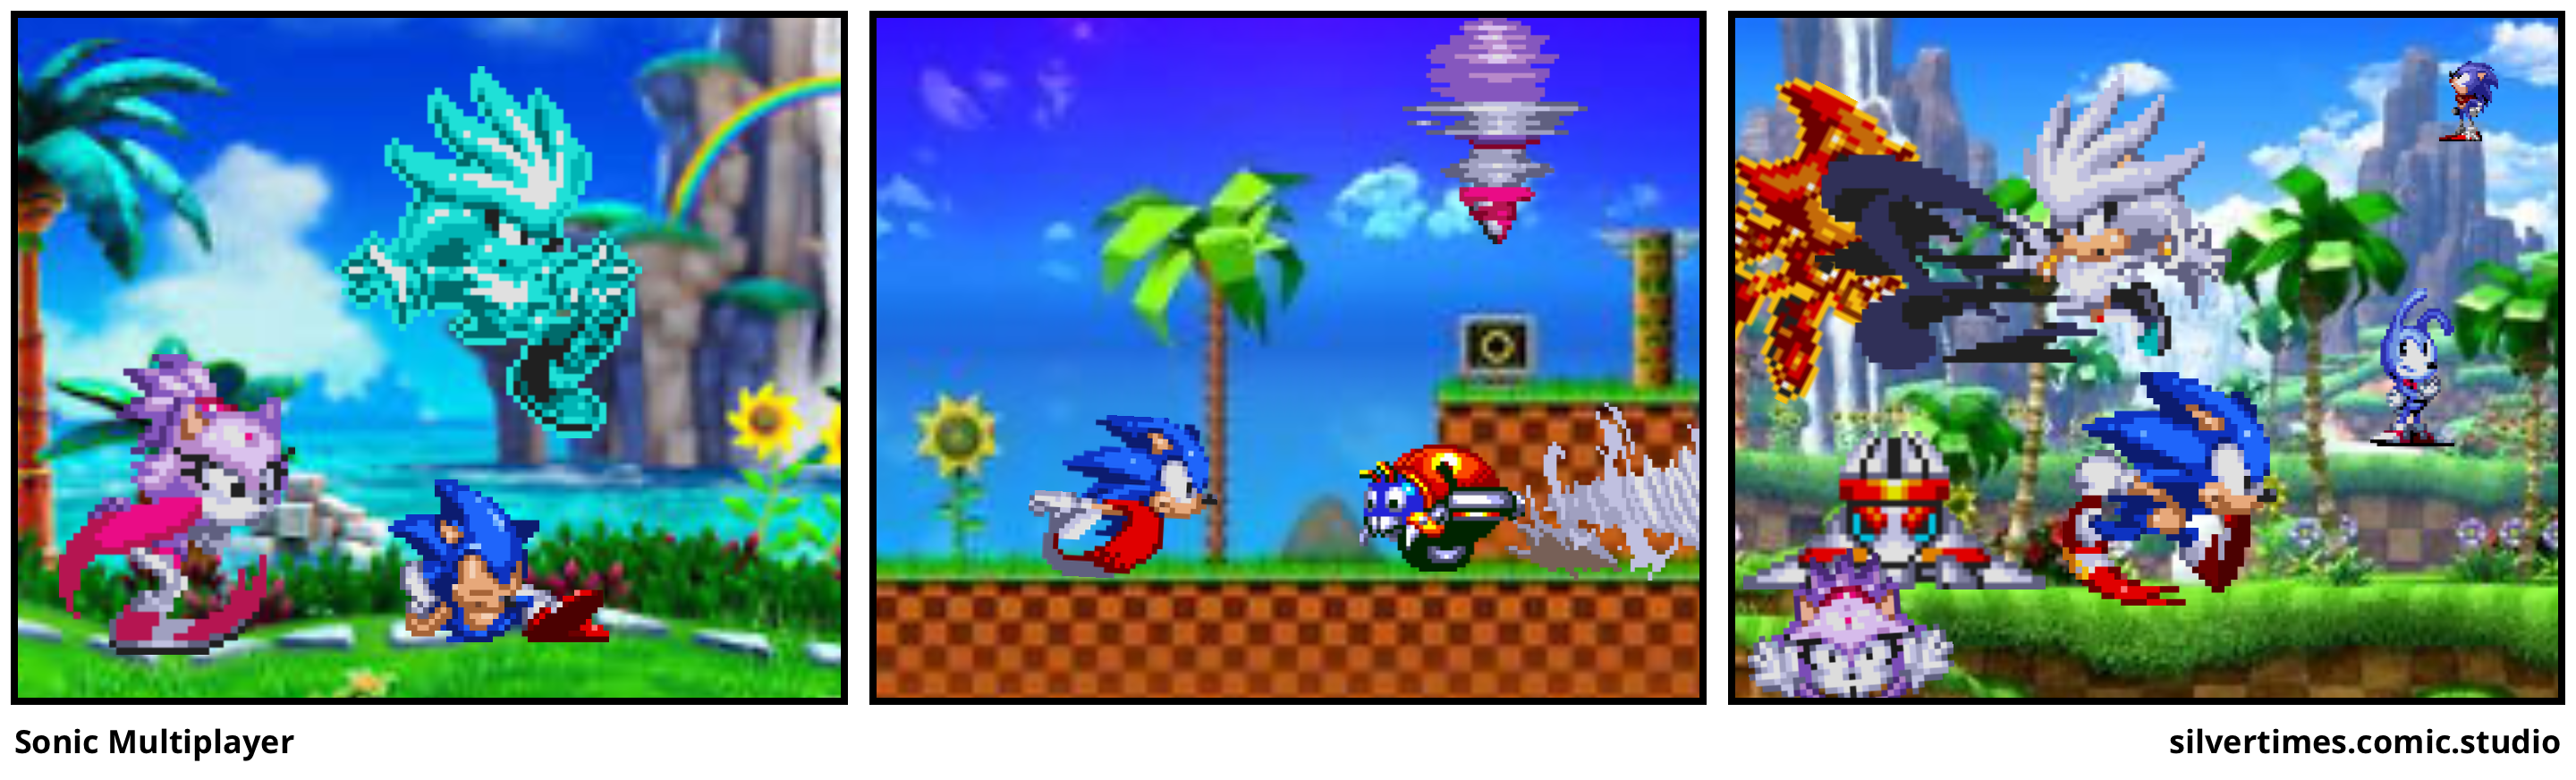 Sonic Multiplayer